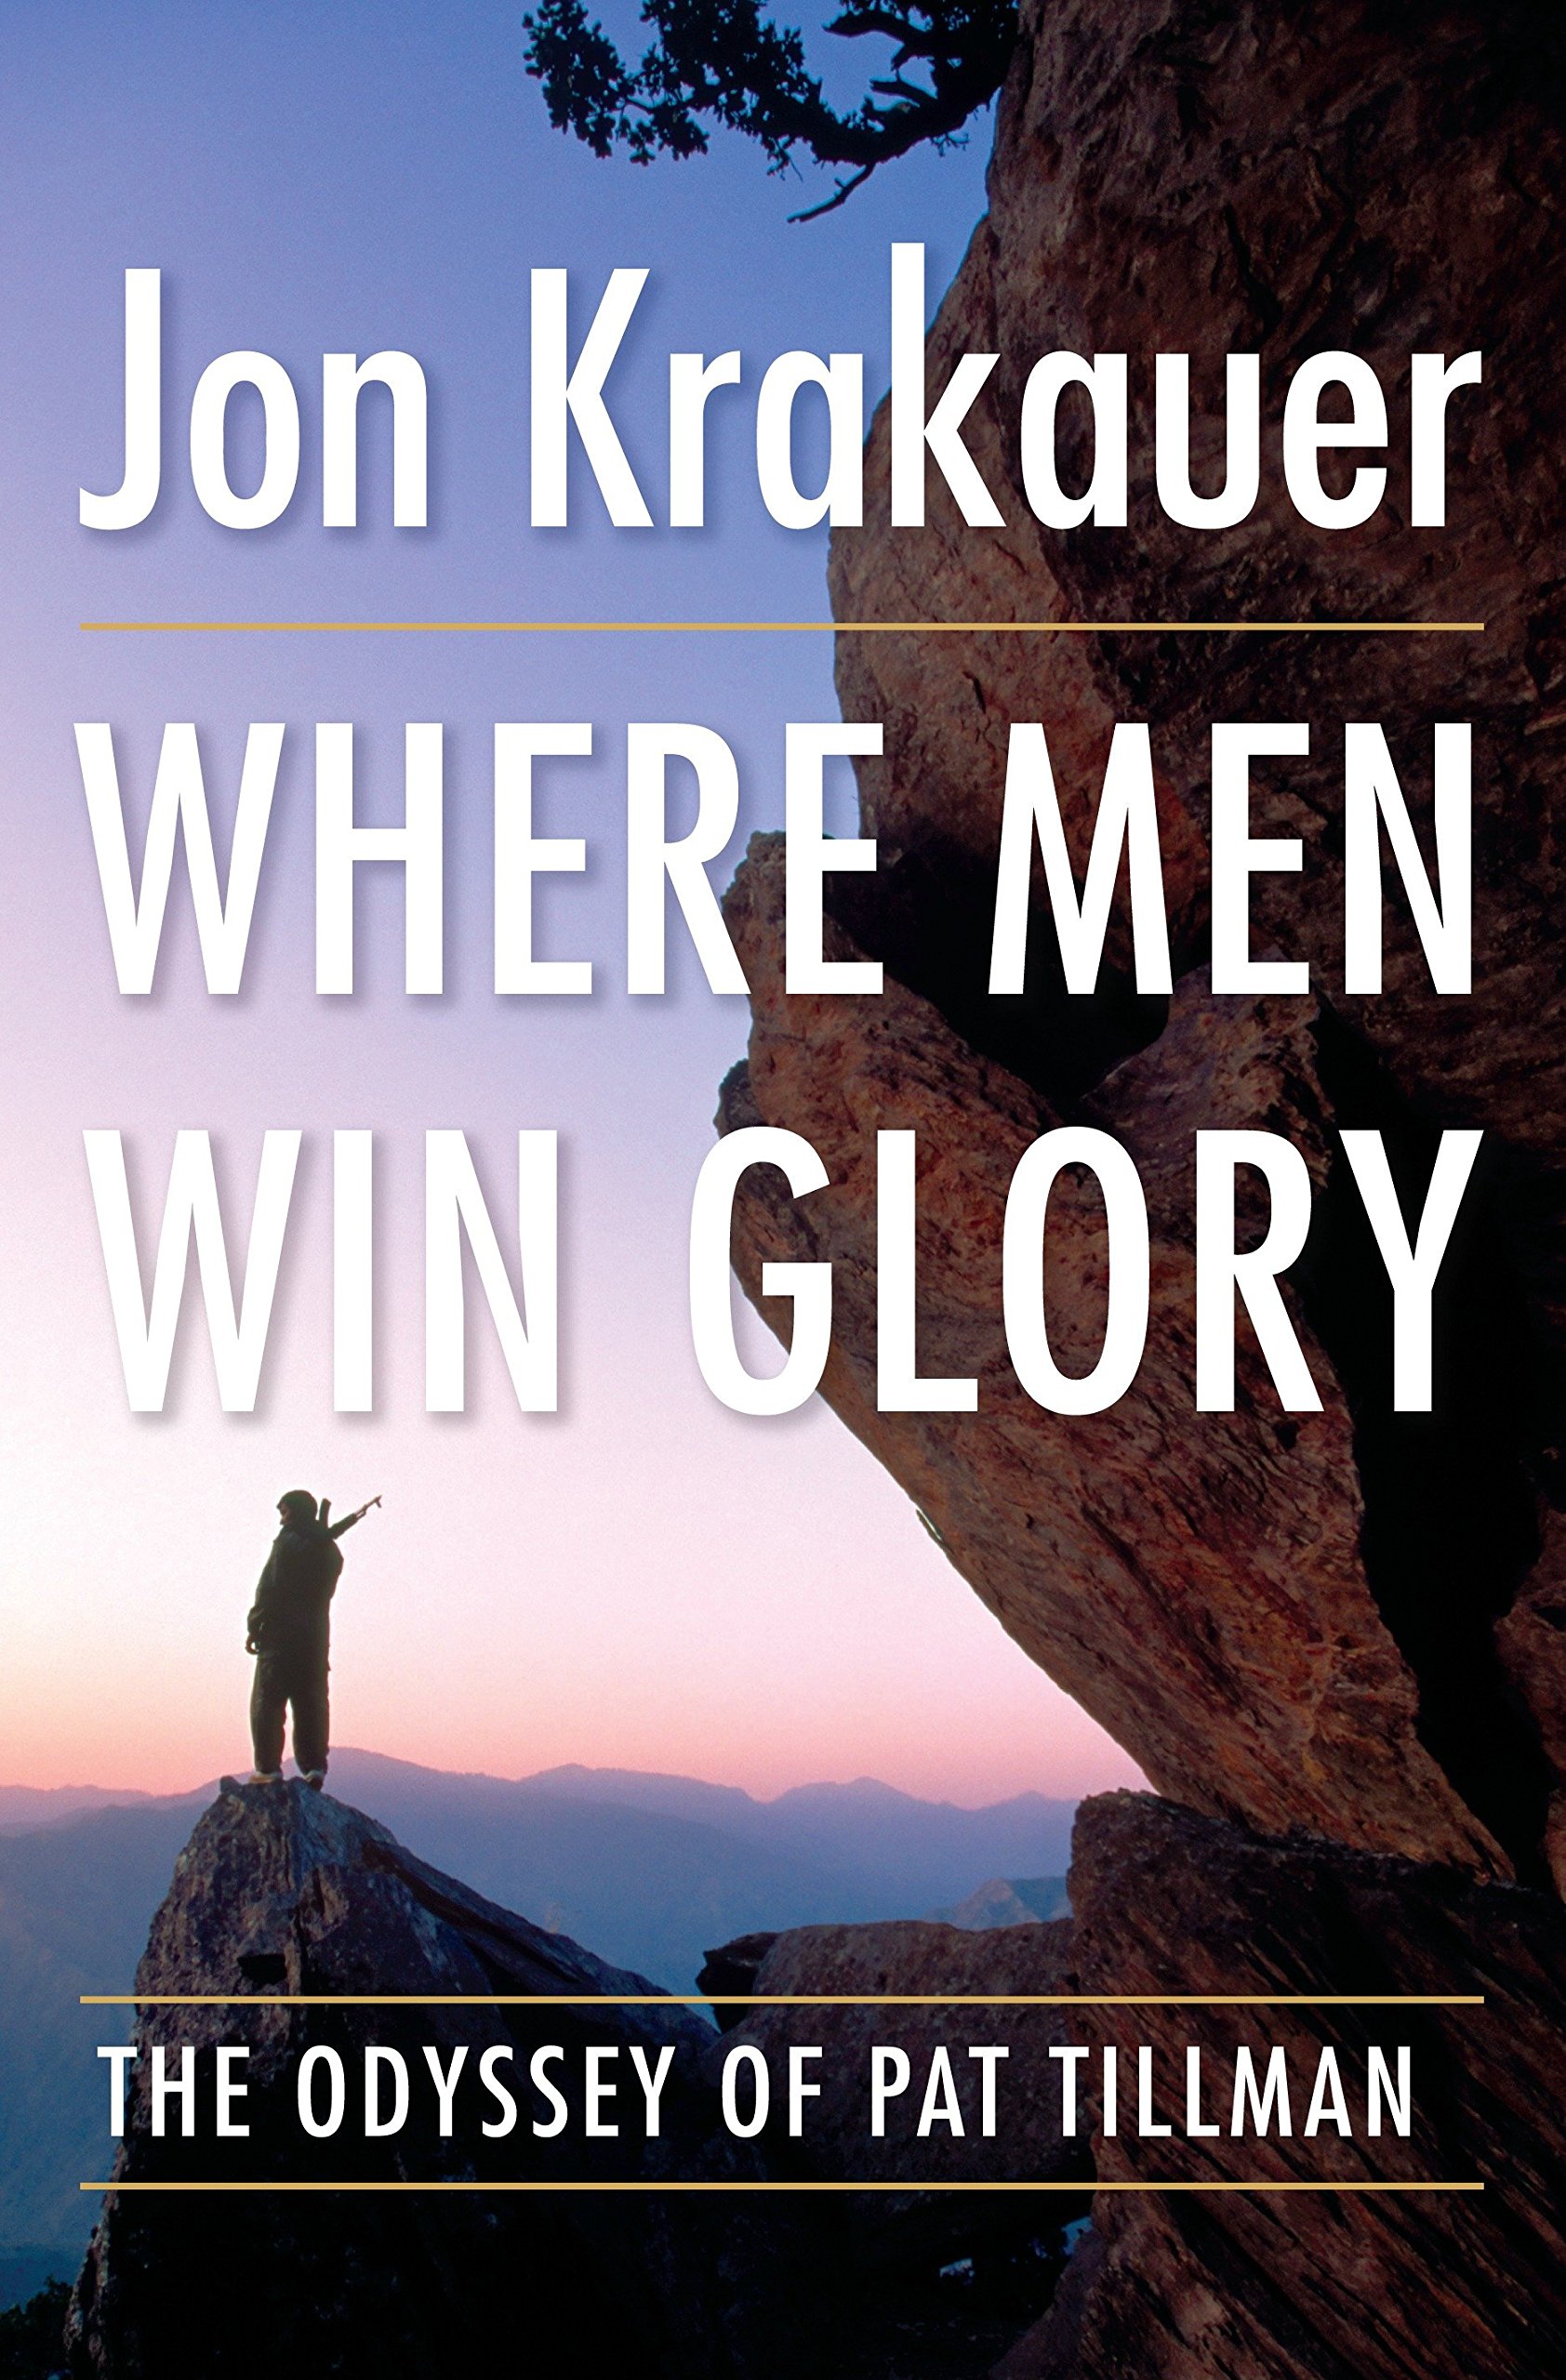 Where Men Win Glory: The Odyssey of Pat Tillman by Jon Krakauer